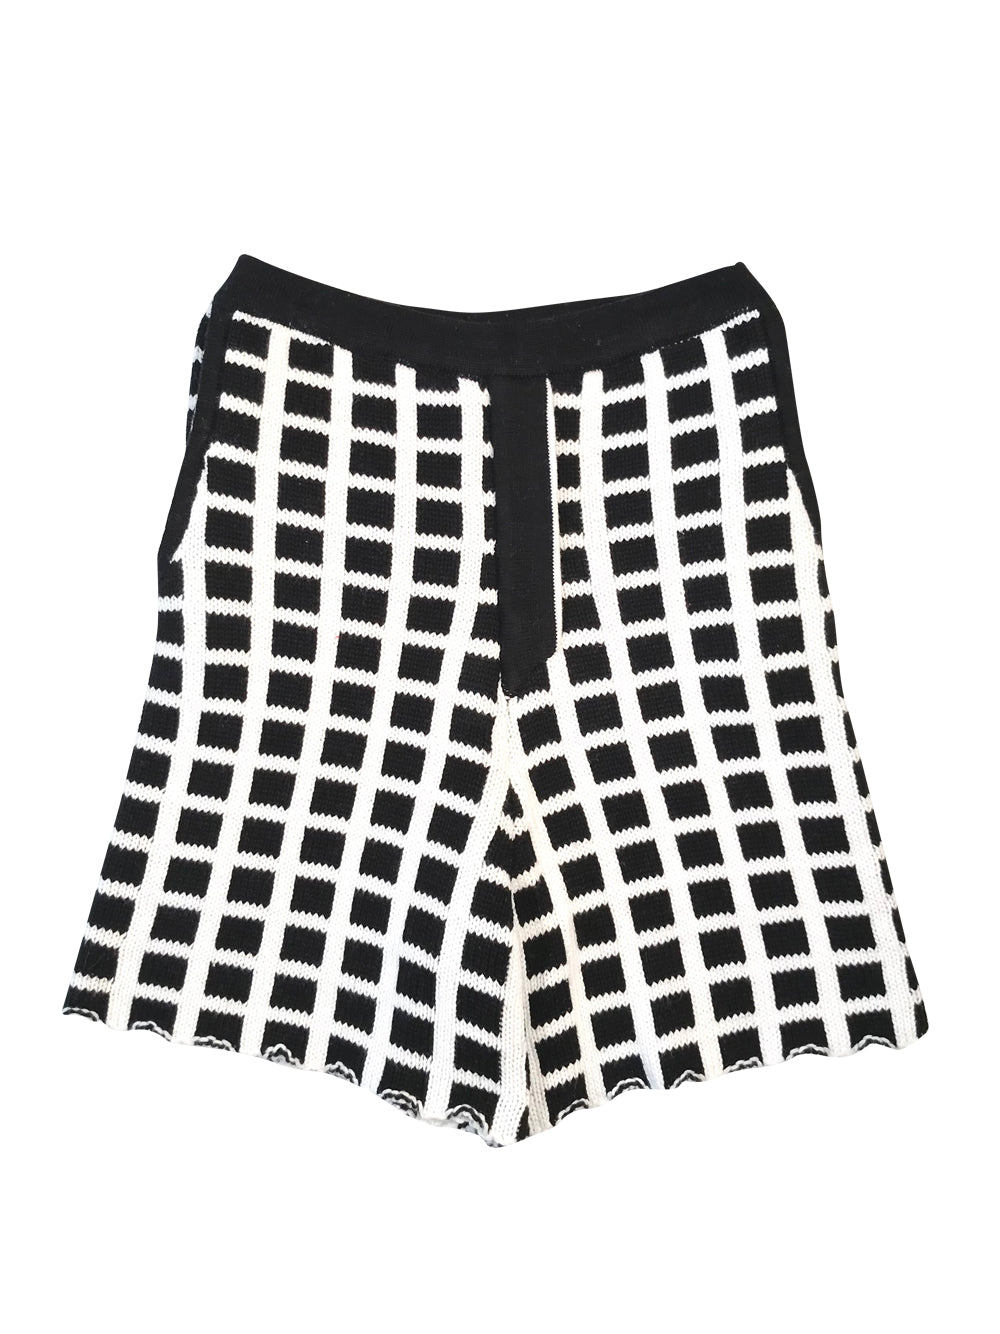 Black and White Shorts